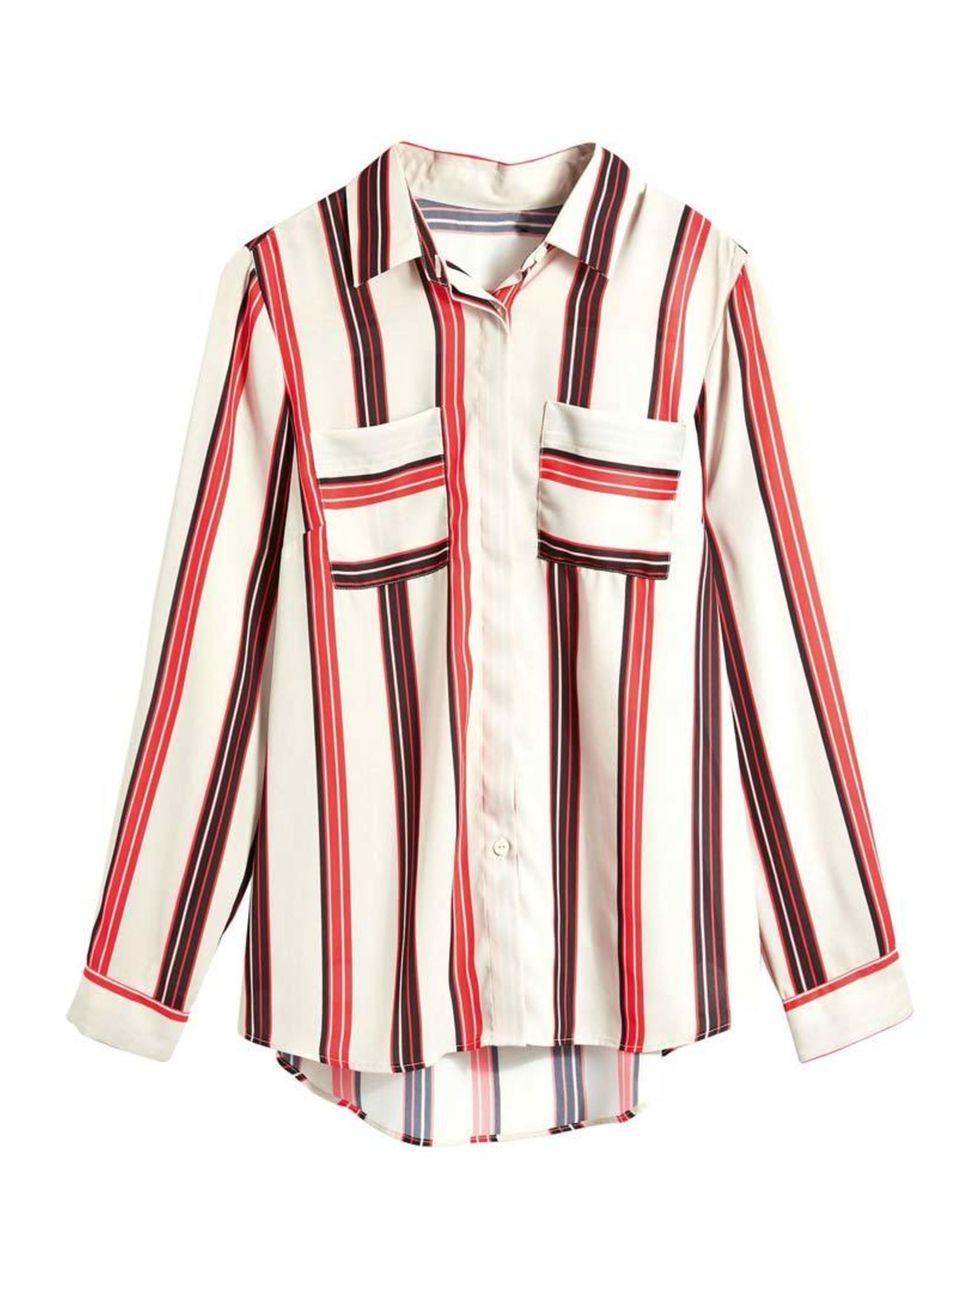 <p>Fashion Intern Emi Papanikola is braving this season's bold stripes.</p>

<p><a href="http://www.next.co.uk/x5546s1" target="_blank">Next</a> shirt, £26</p>